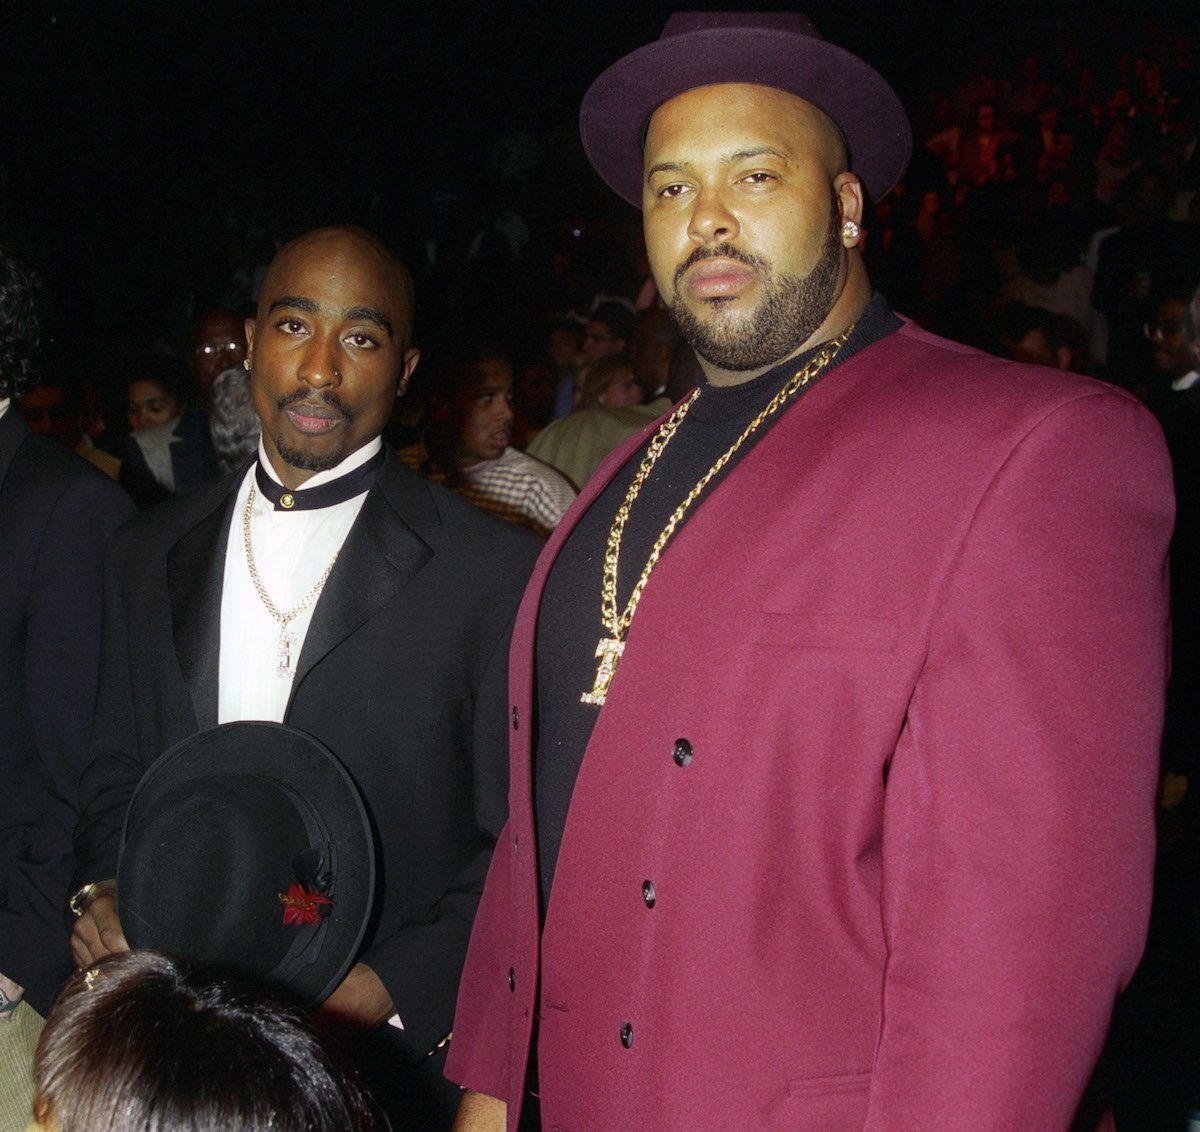 Suge Knight and Tupac Shakur